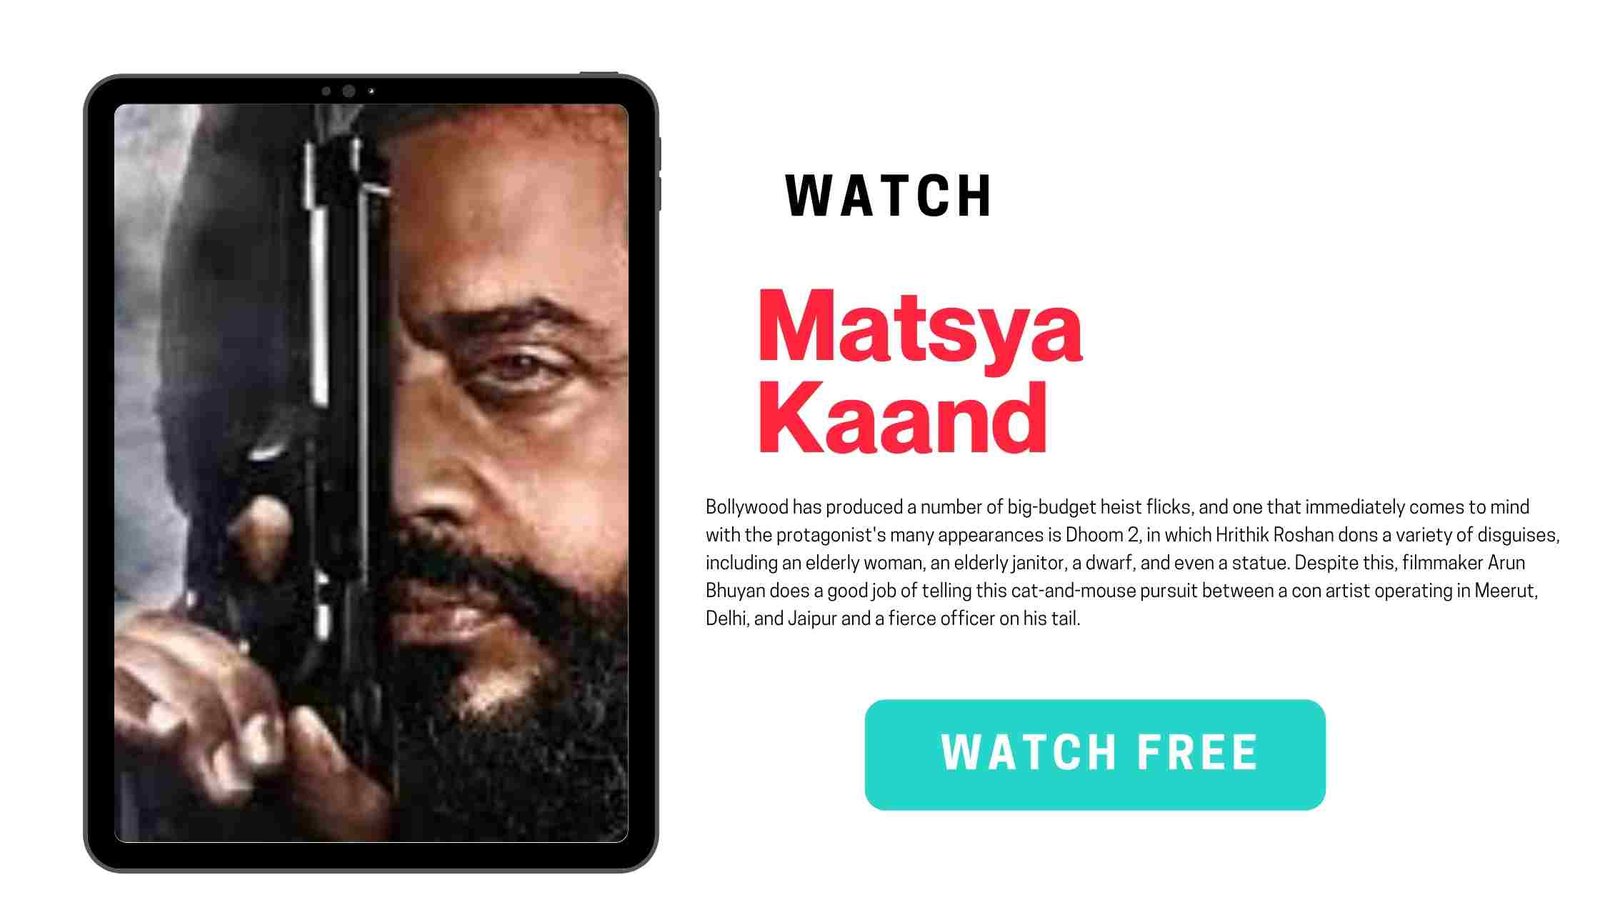 how to watch matsya kaand for free